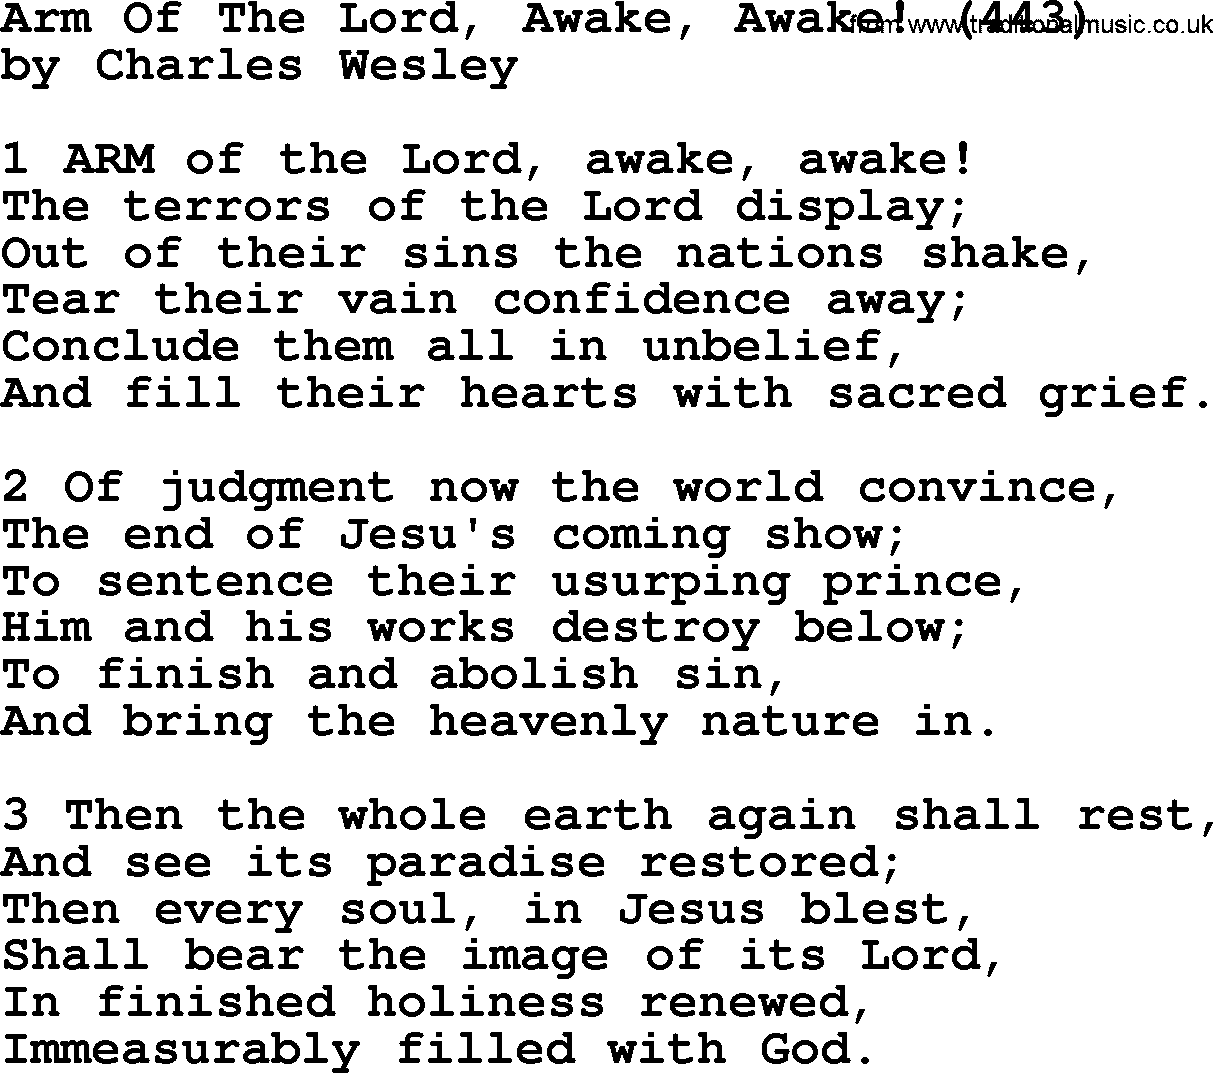 Charles Wesley hymn: Arm Of The Lord, Awake, Awake! (443), lyrics